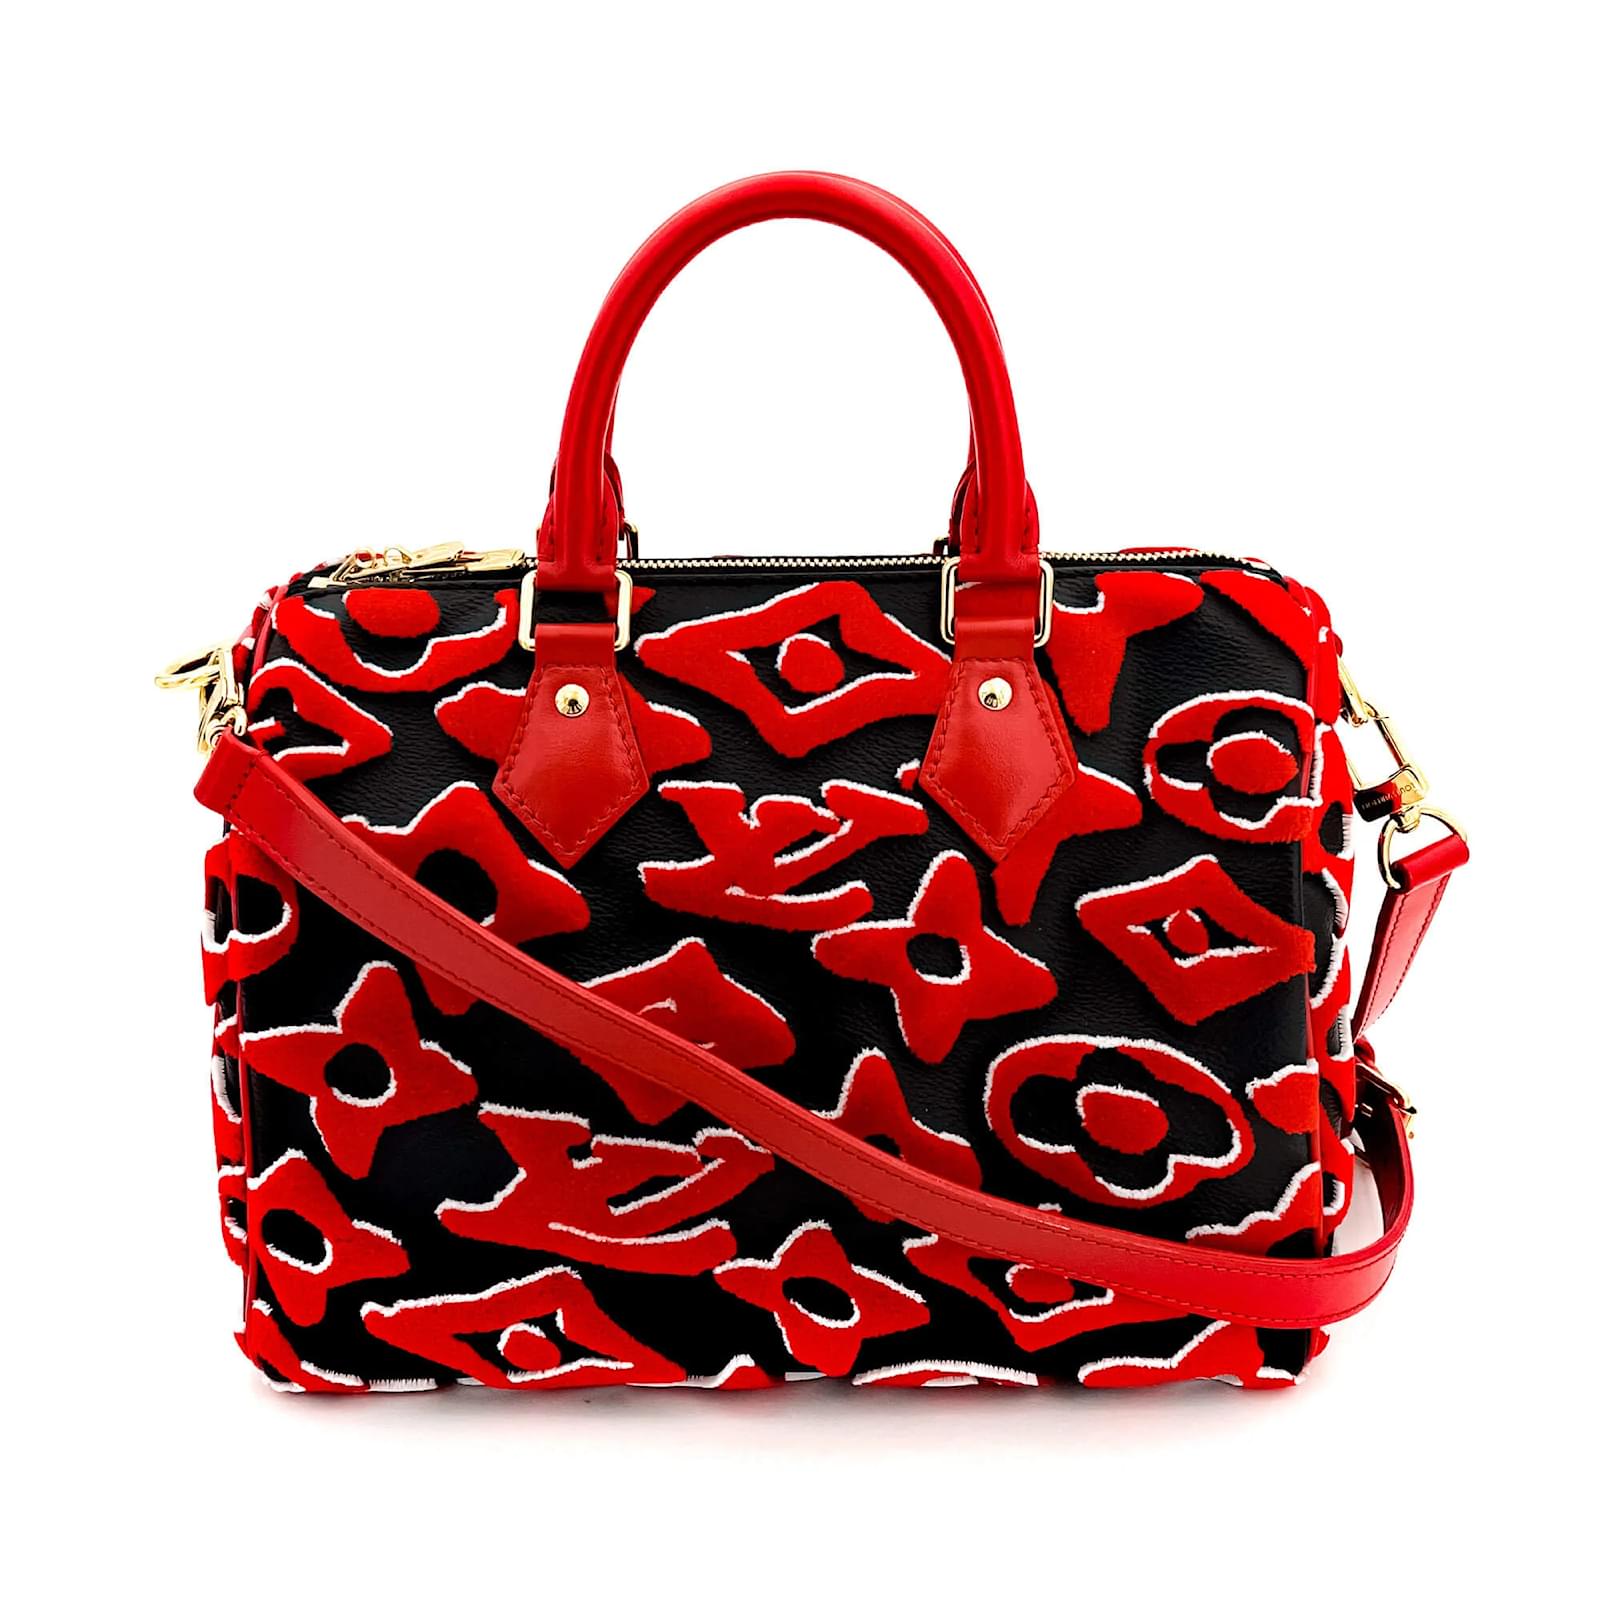 Louis Vuitton Speedy Bandoulière 30 Monogram Urs Fischer Bag Red